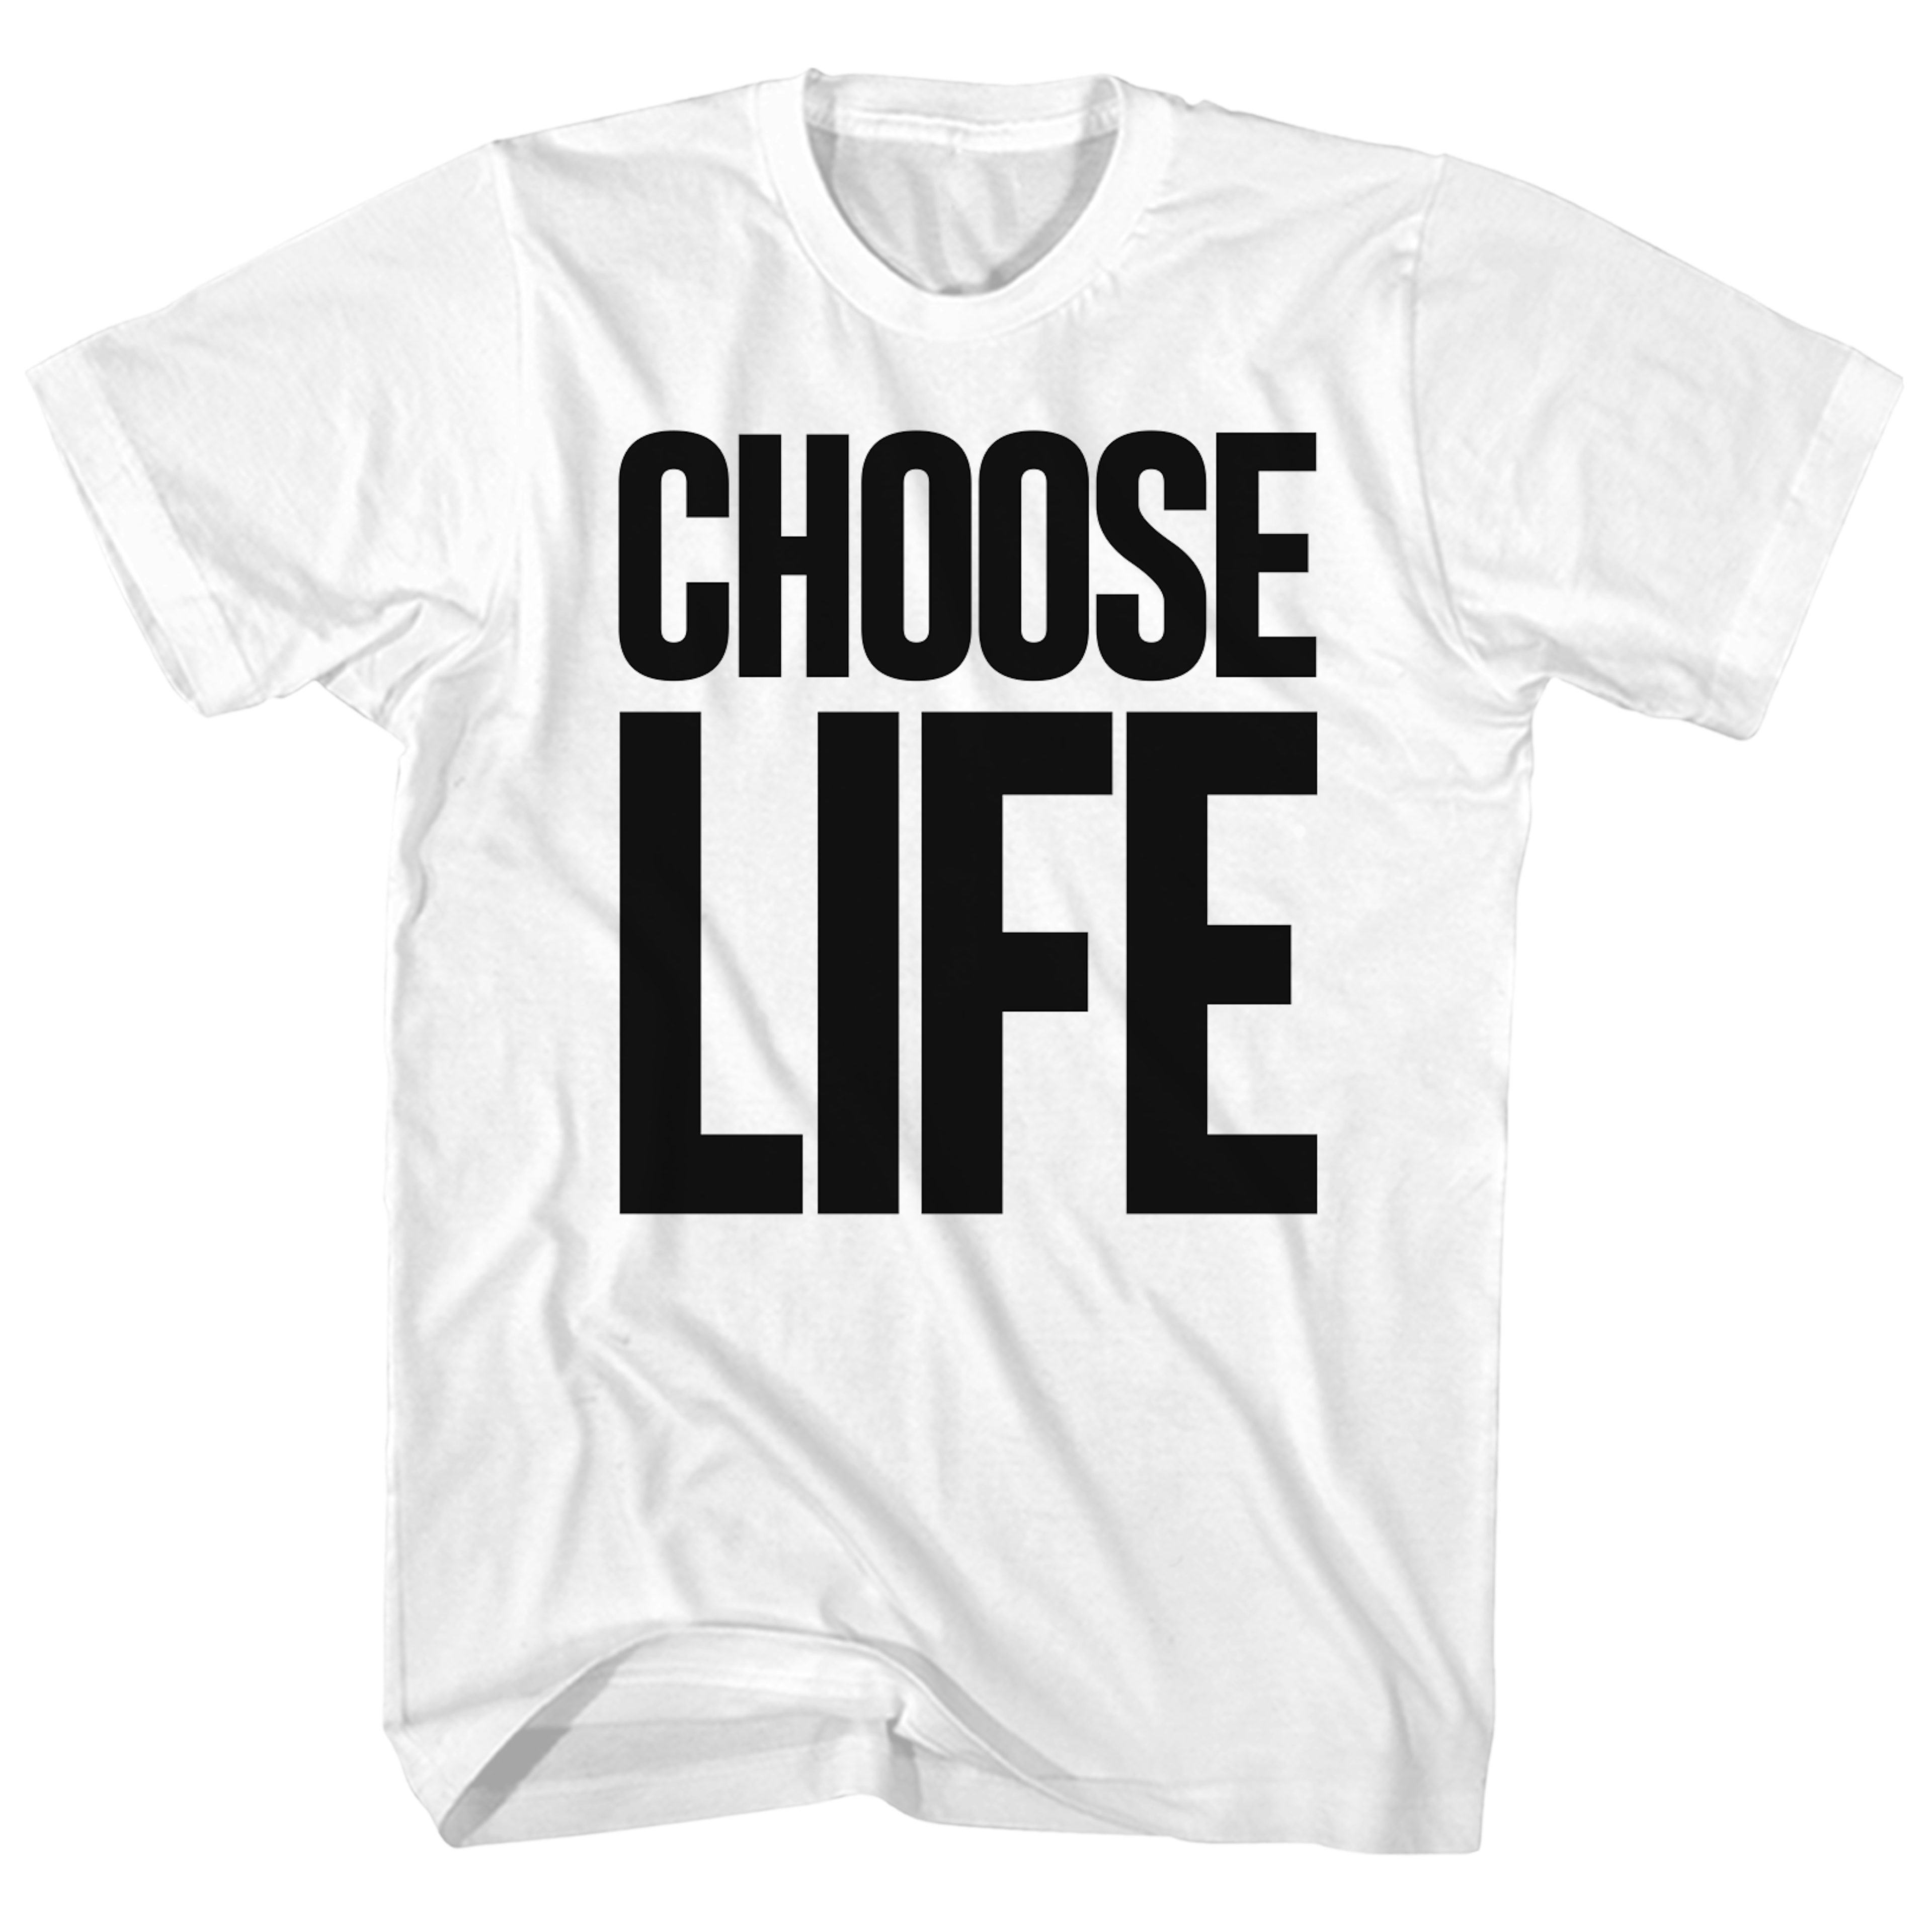 My choose my life